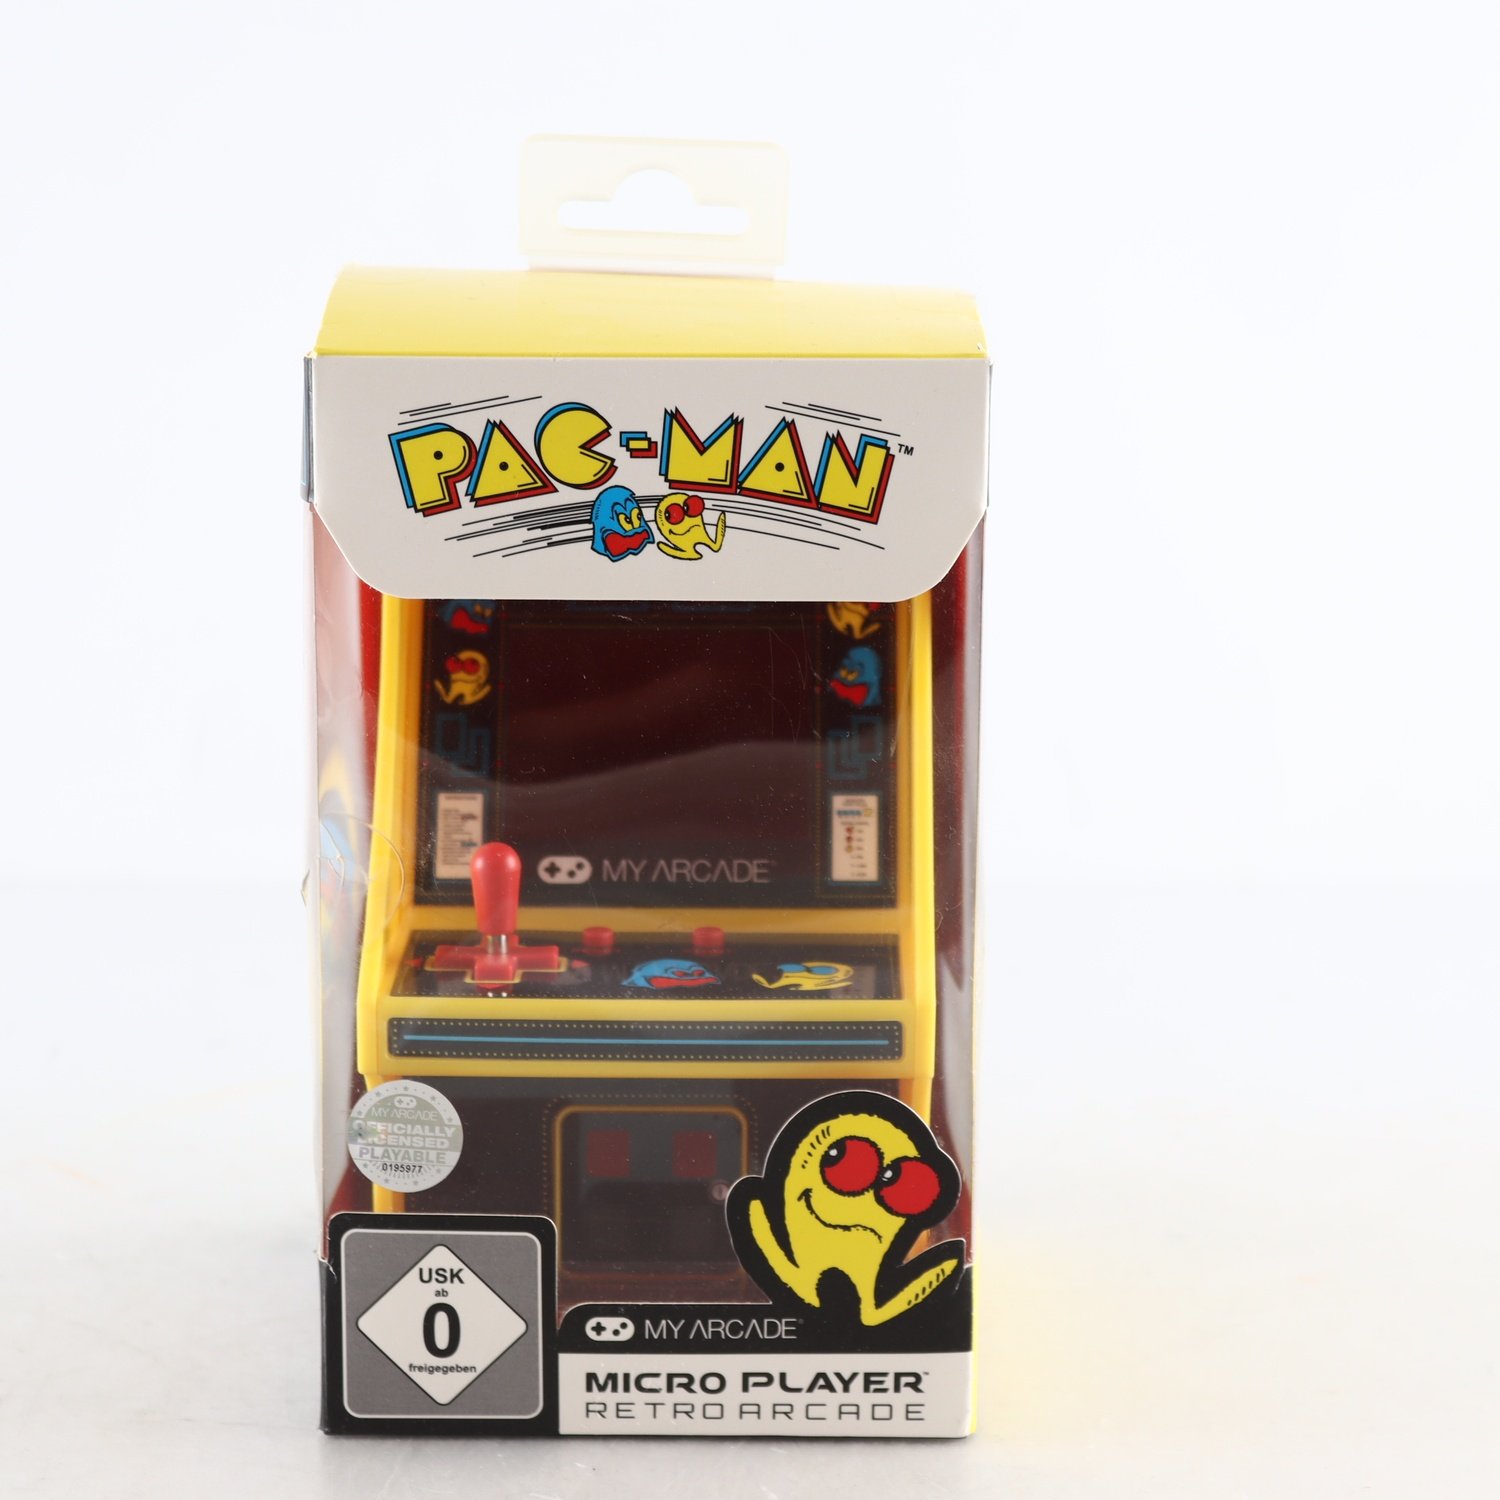 Spel, Pac-man